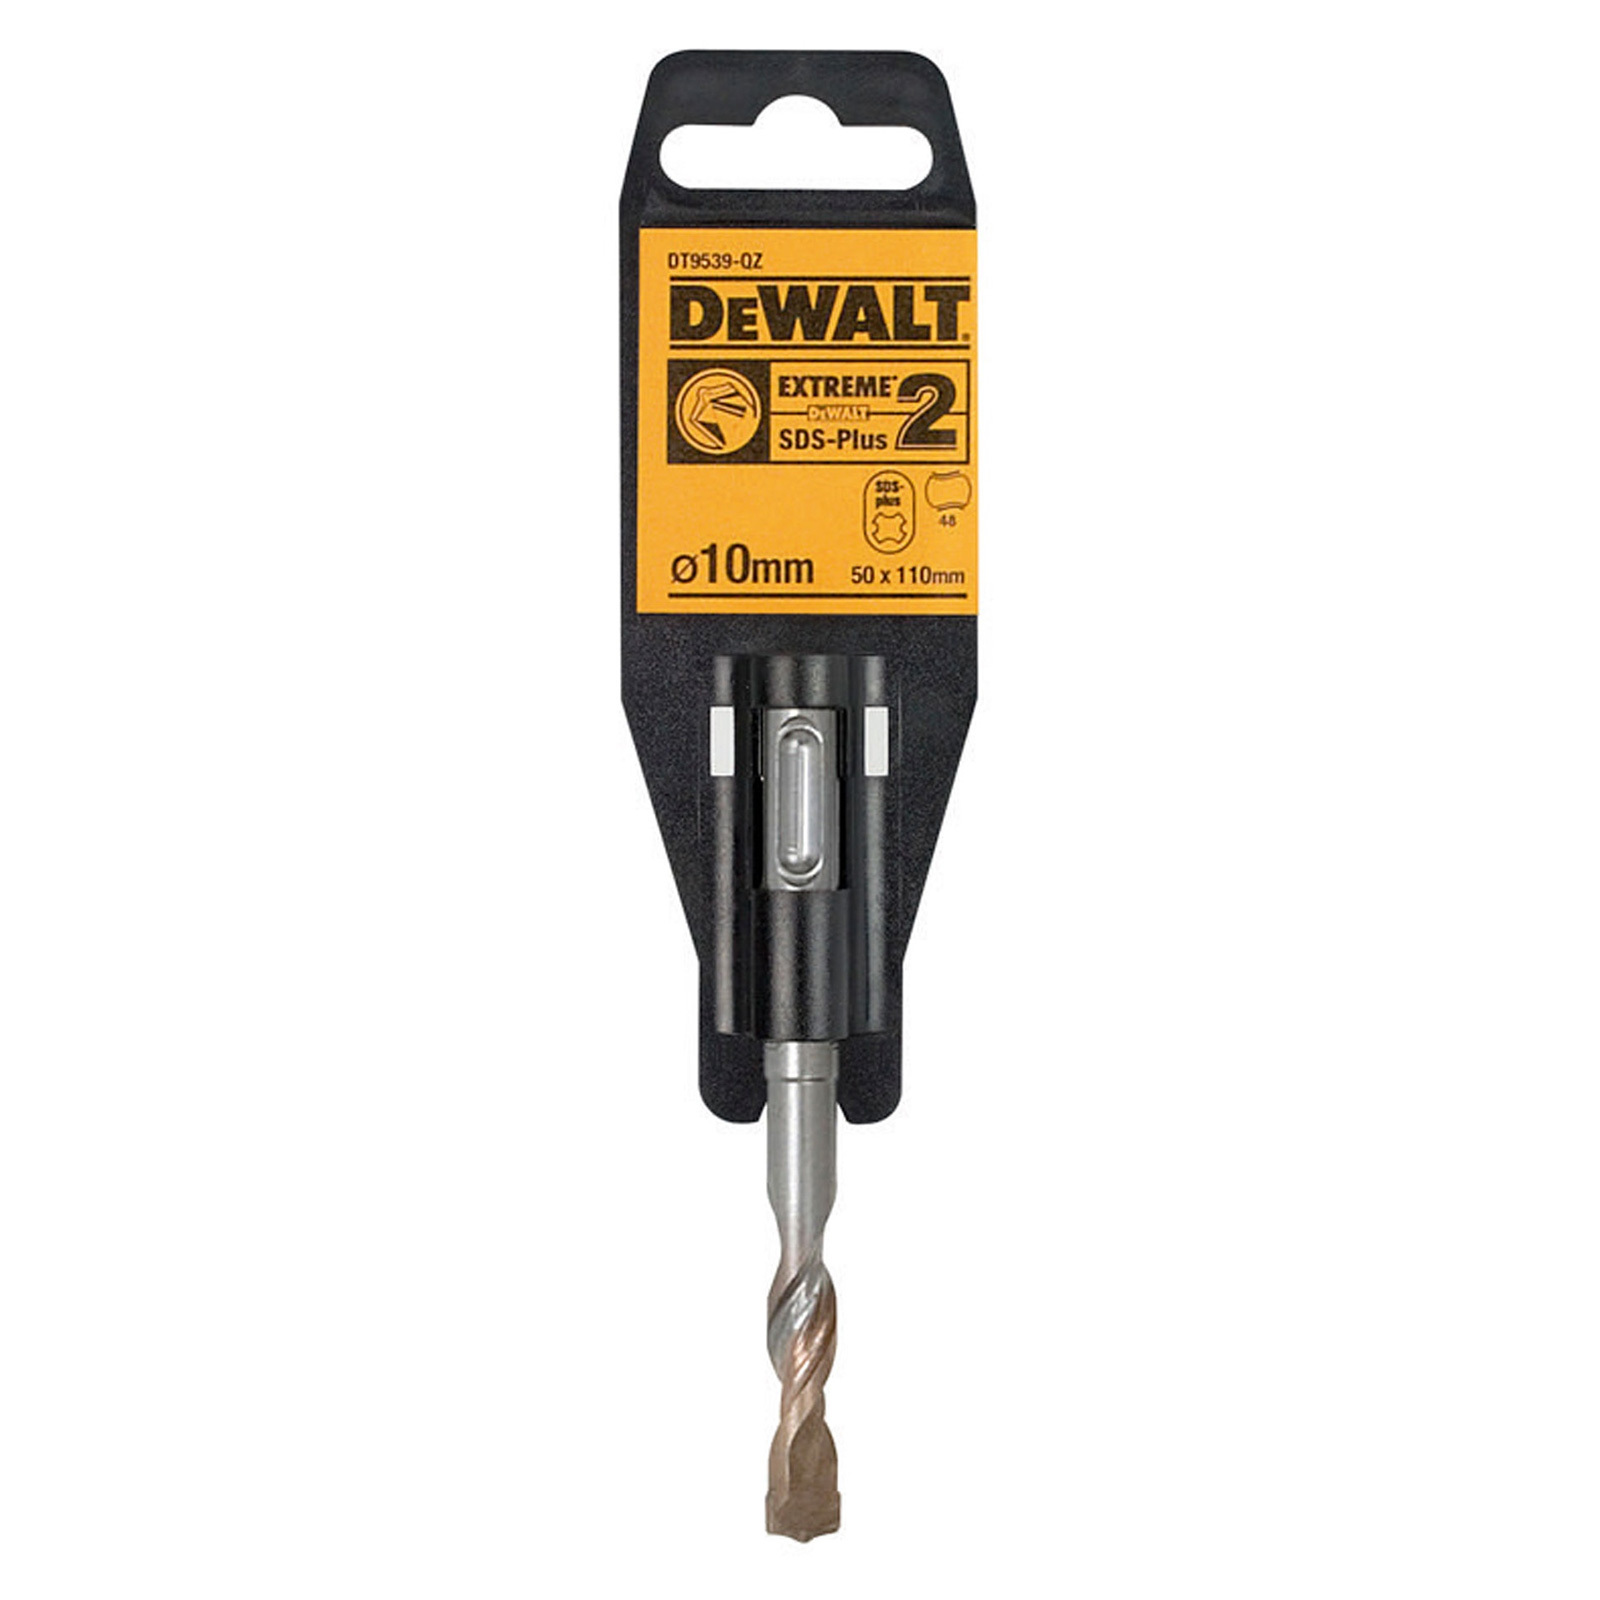 DeWalt 10mm x 110mm SDS Plus Extreme Drill - 2 Cutter DT9539-QZ